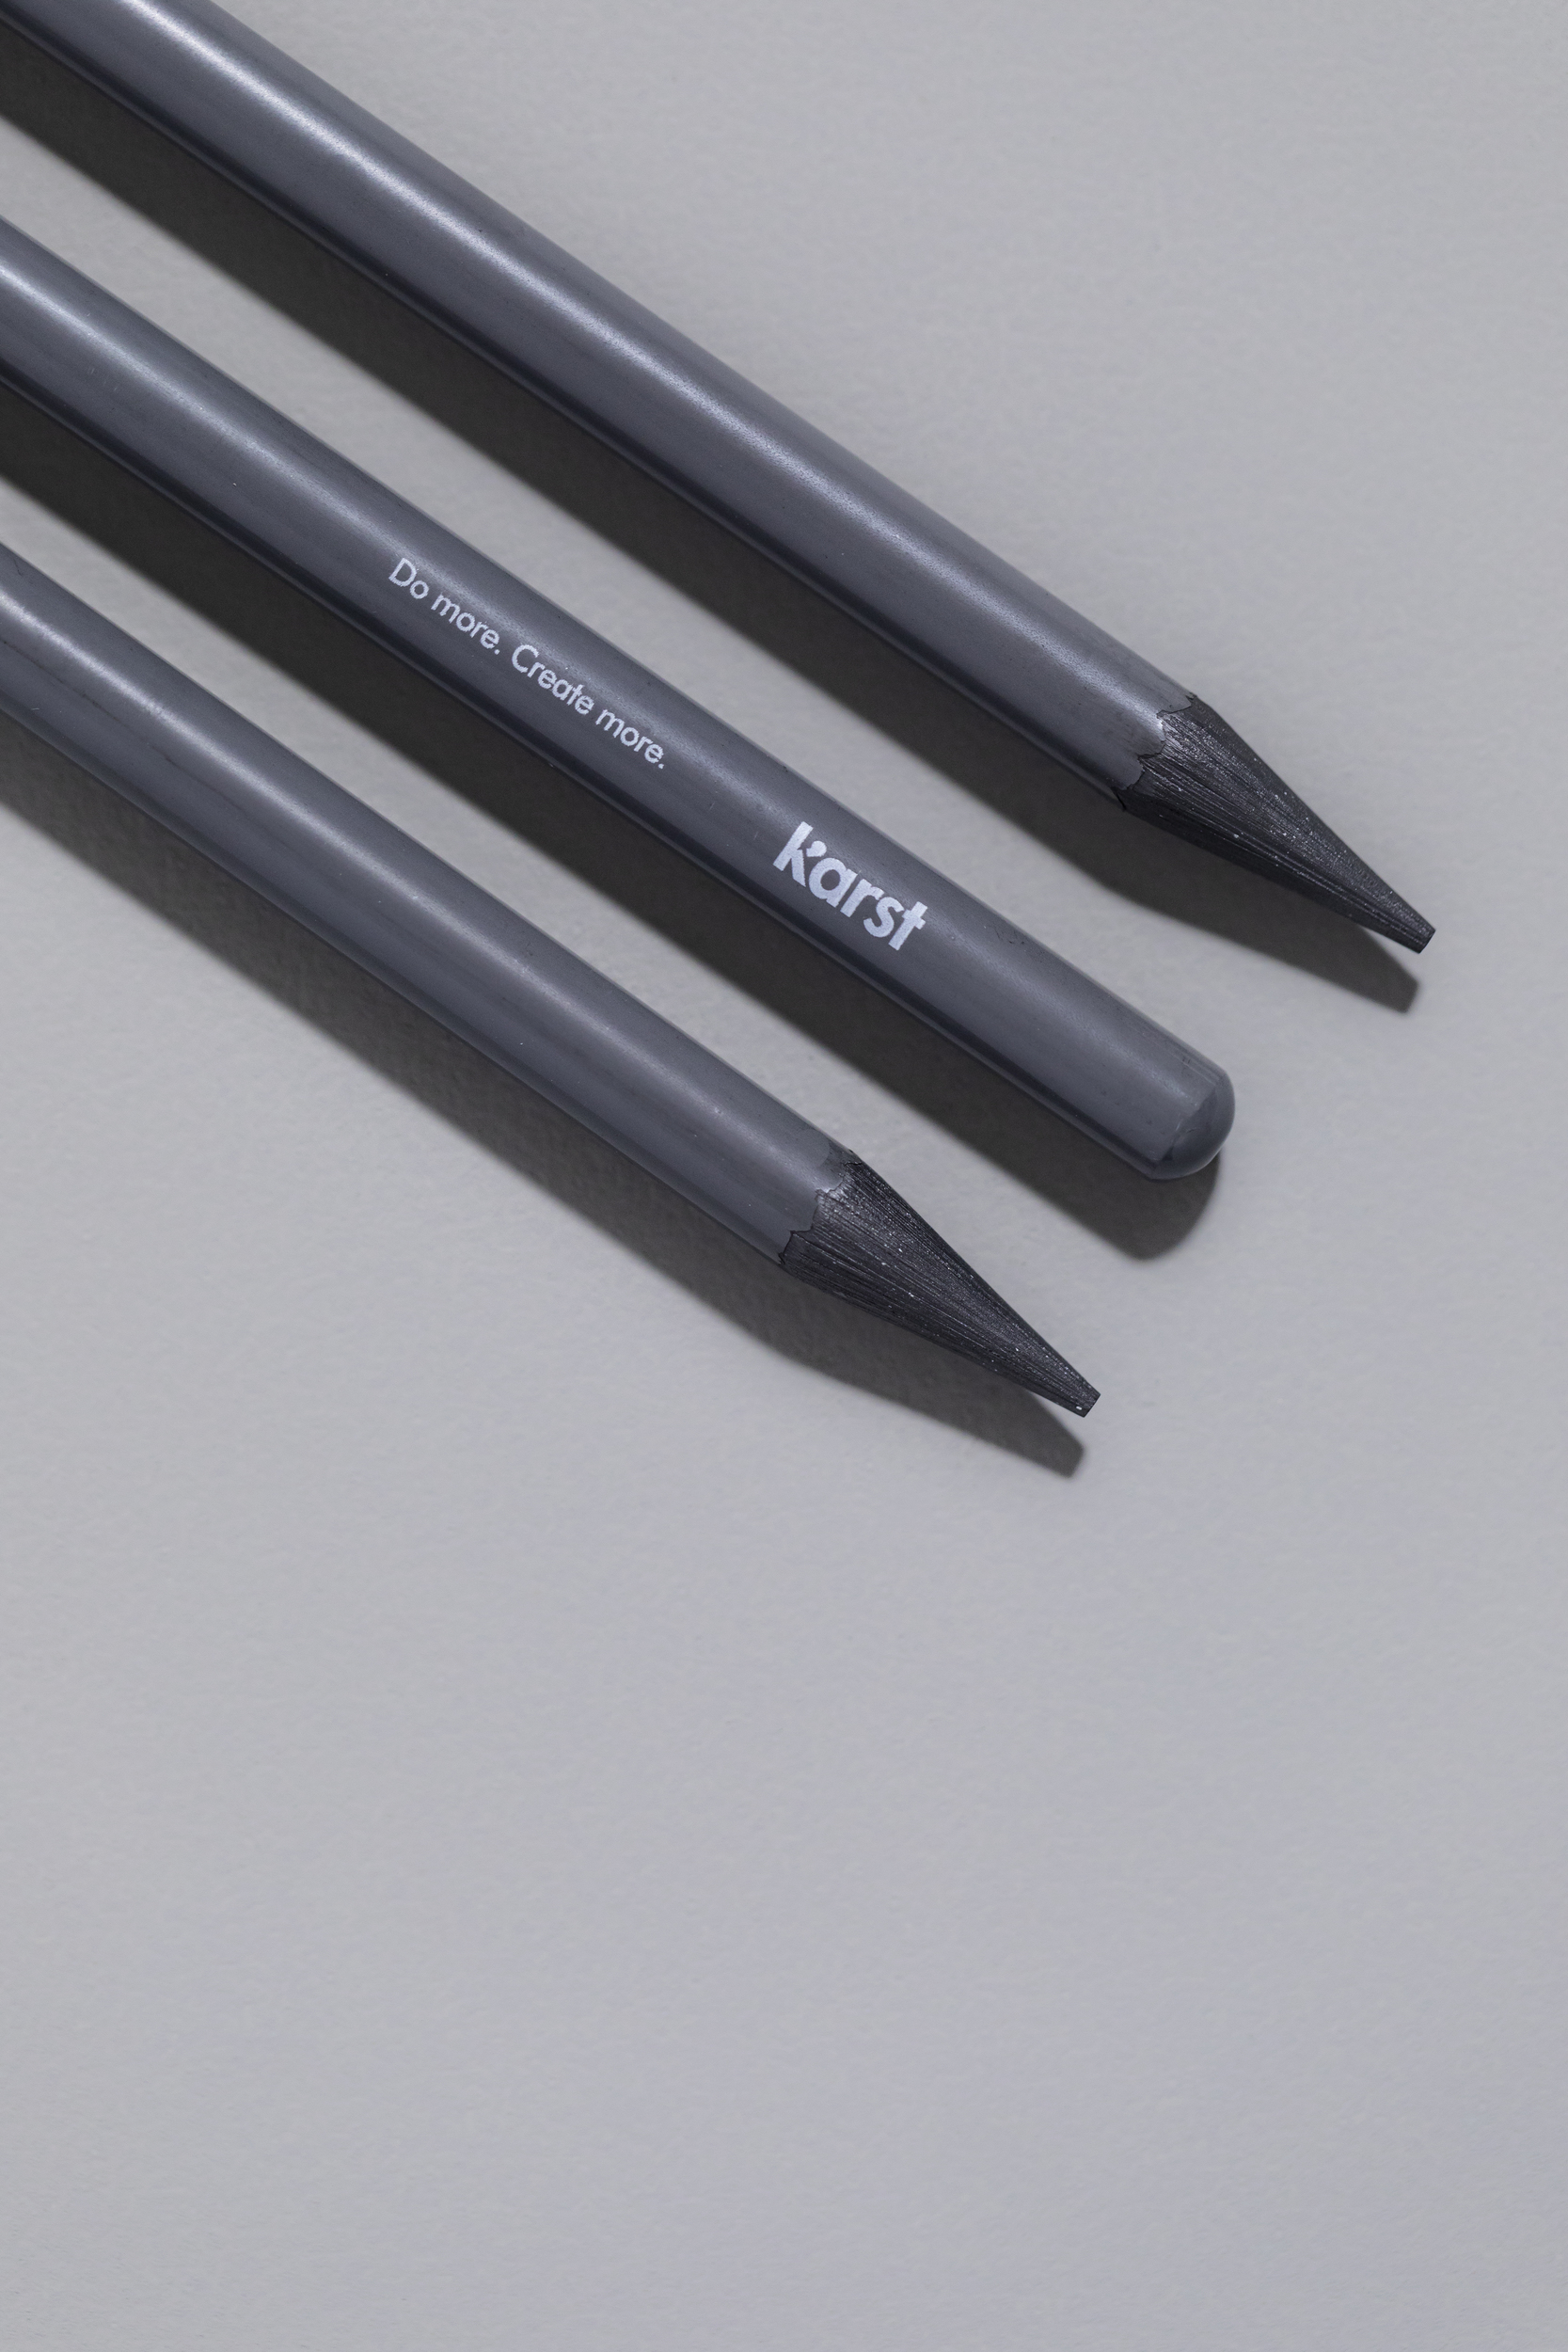 Karst Goods  Woodless Artist Pencils